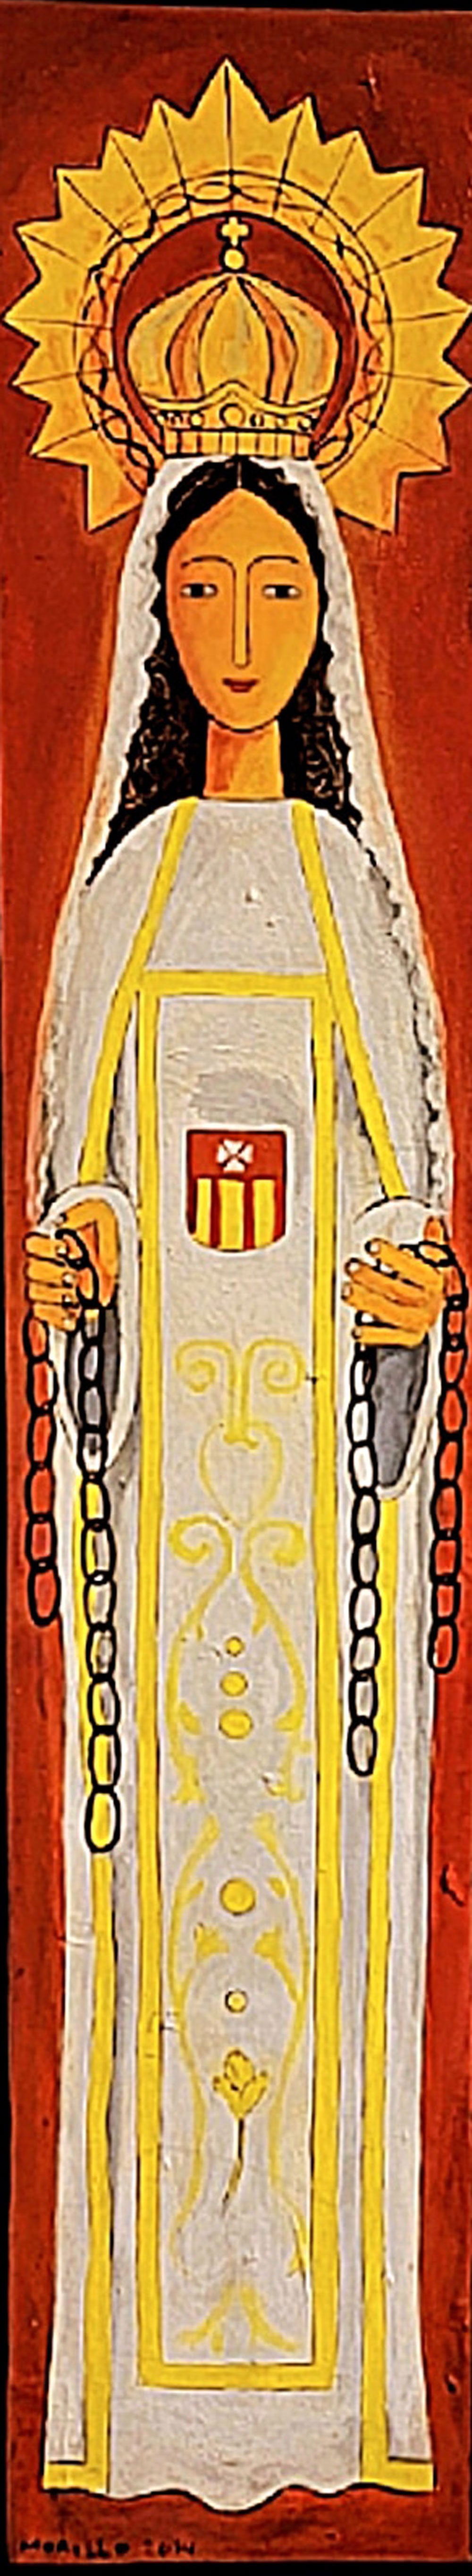 José Morillo 55"x18" Virgin Of Mercy Unframed Acrylic on Canvas Painting #33JM